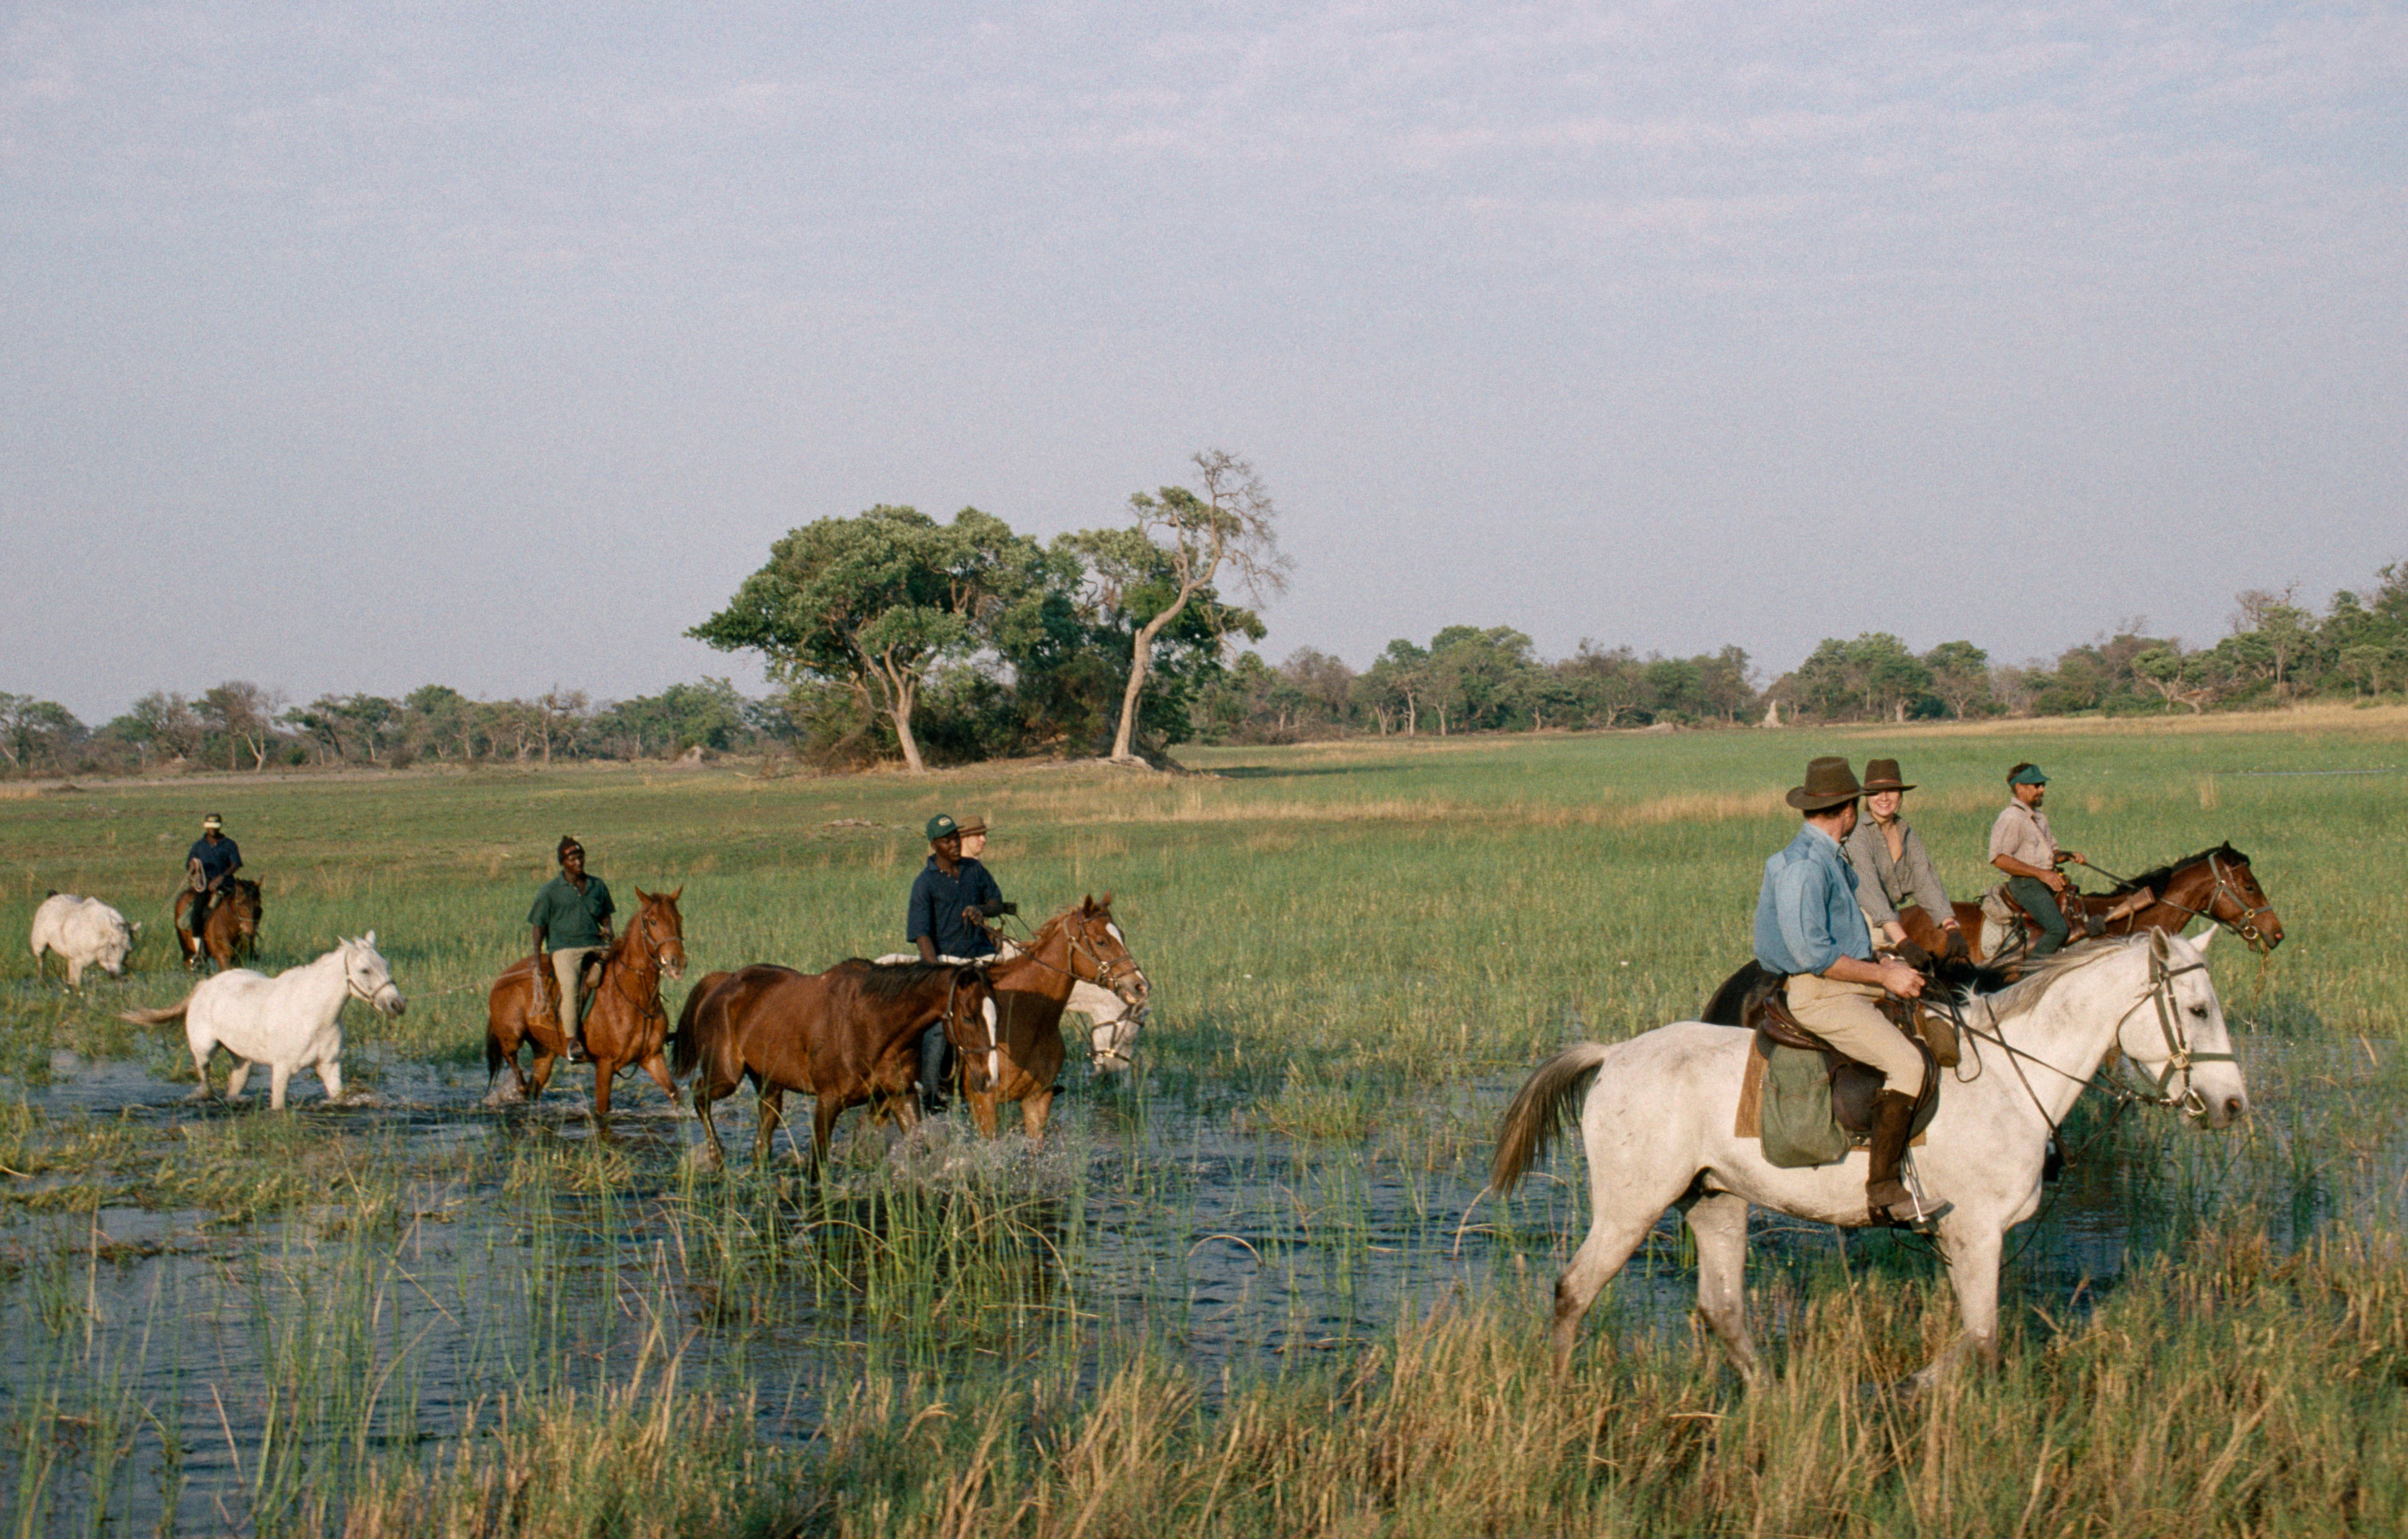 BOTSWANA Southern Africa Okavango Delta Horse safari with tourists riding through water marshes